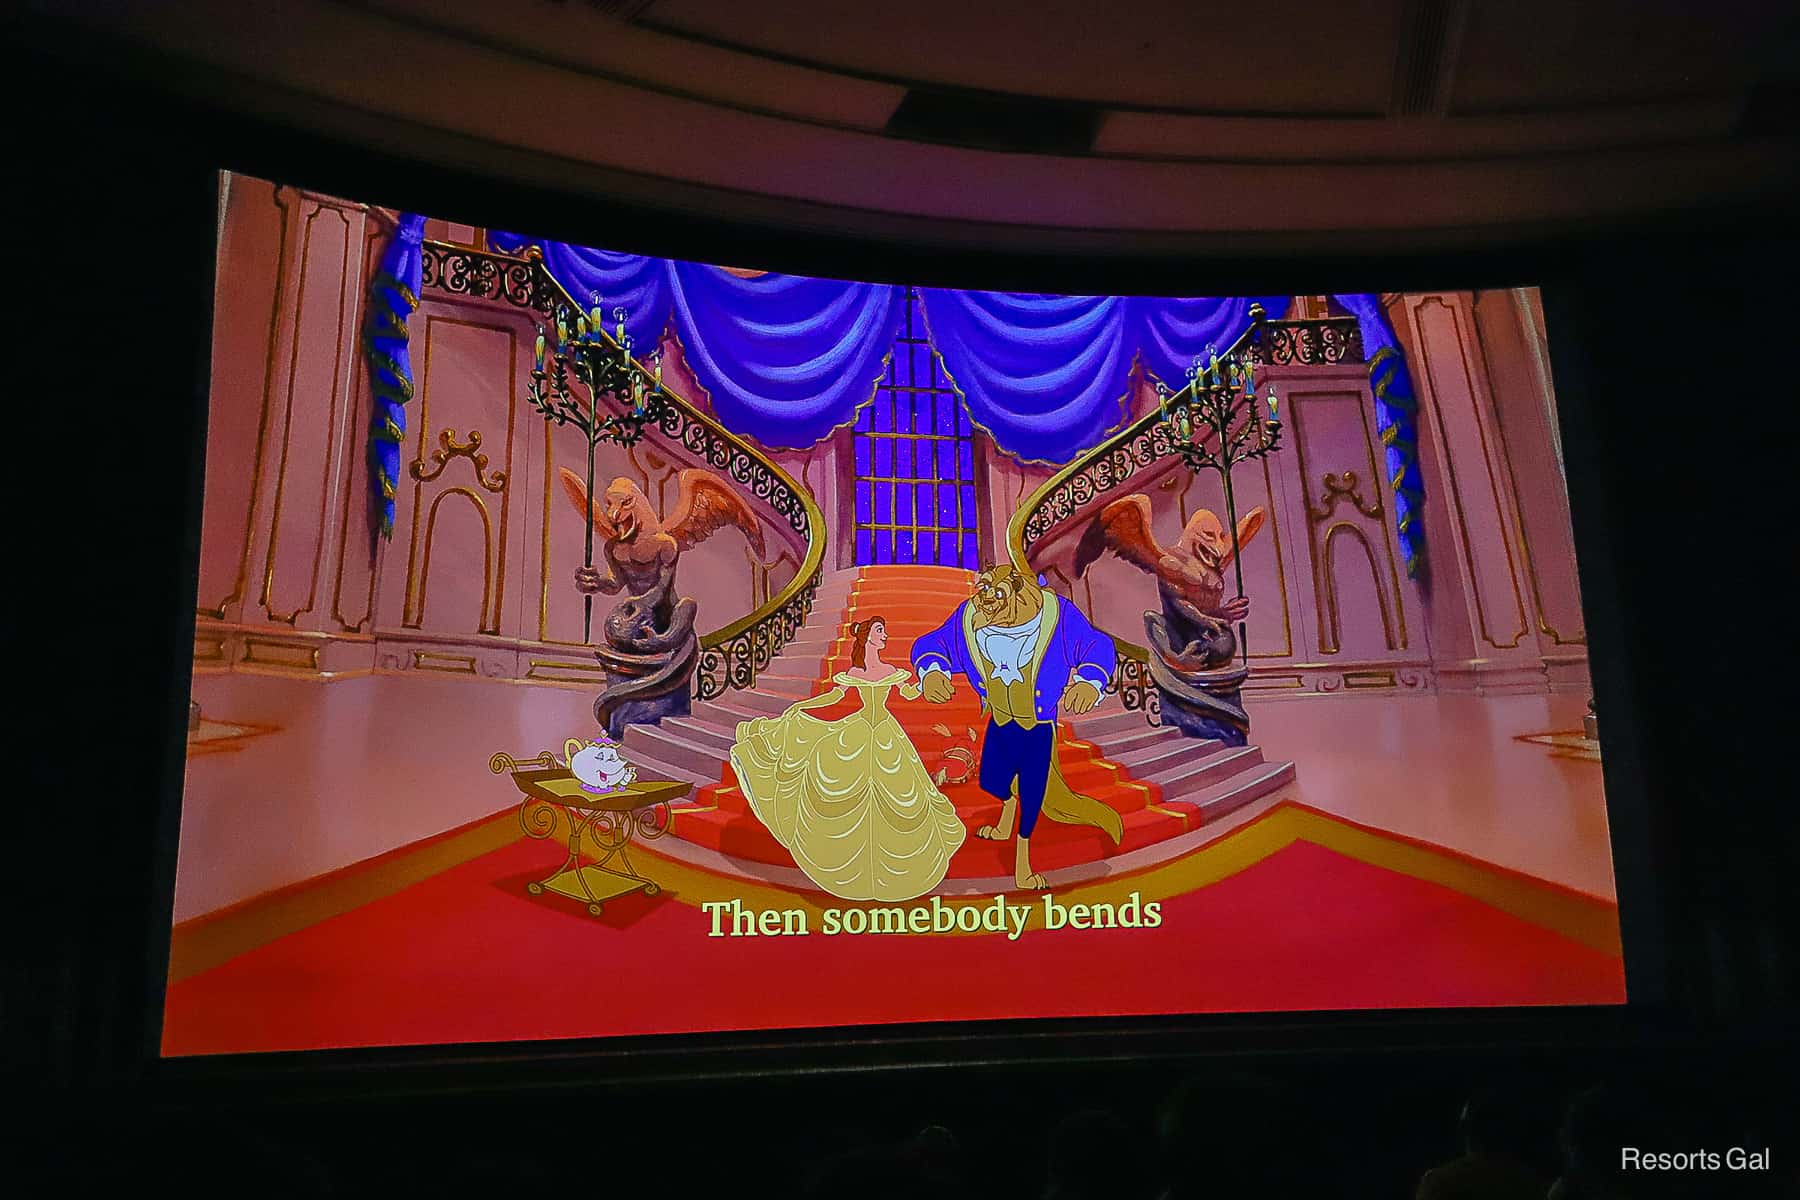 on screen lyrics read "Then somebody bends." 